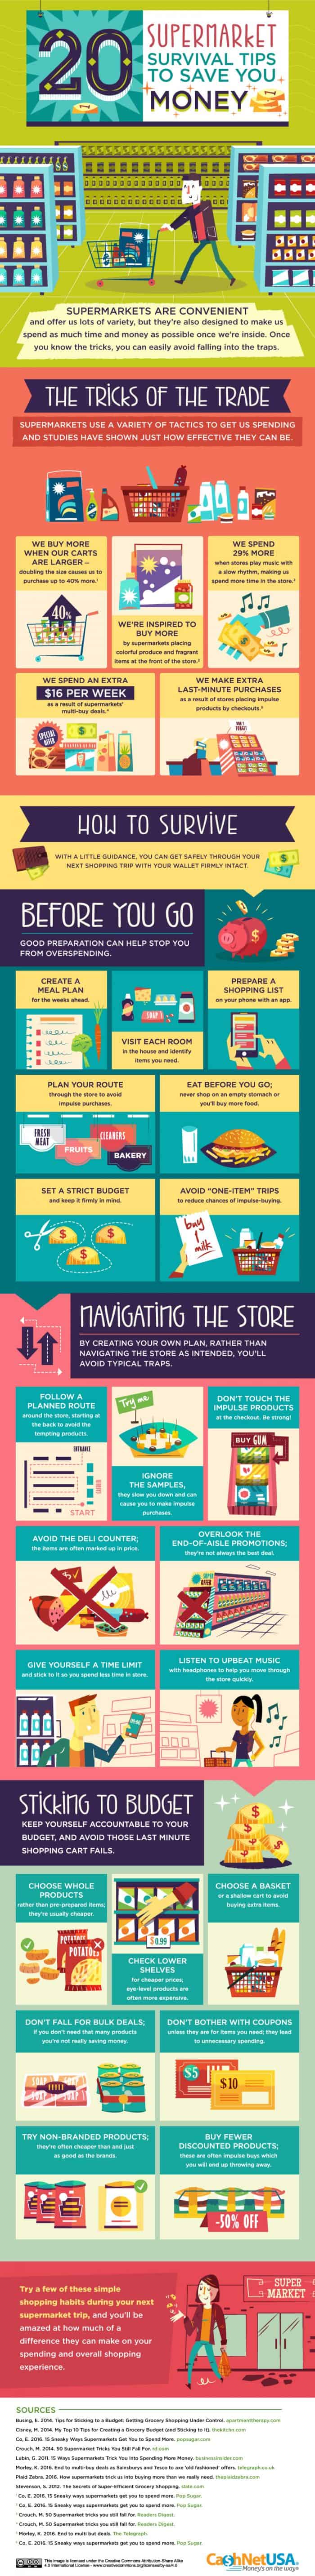 20 Money-Saving Supermarket Survival Tips Infographic